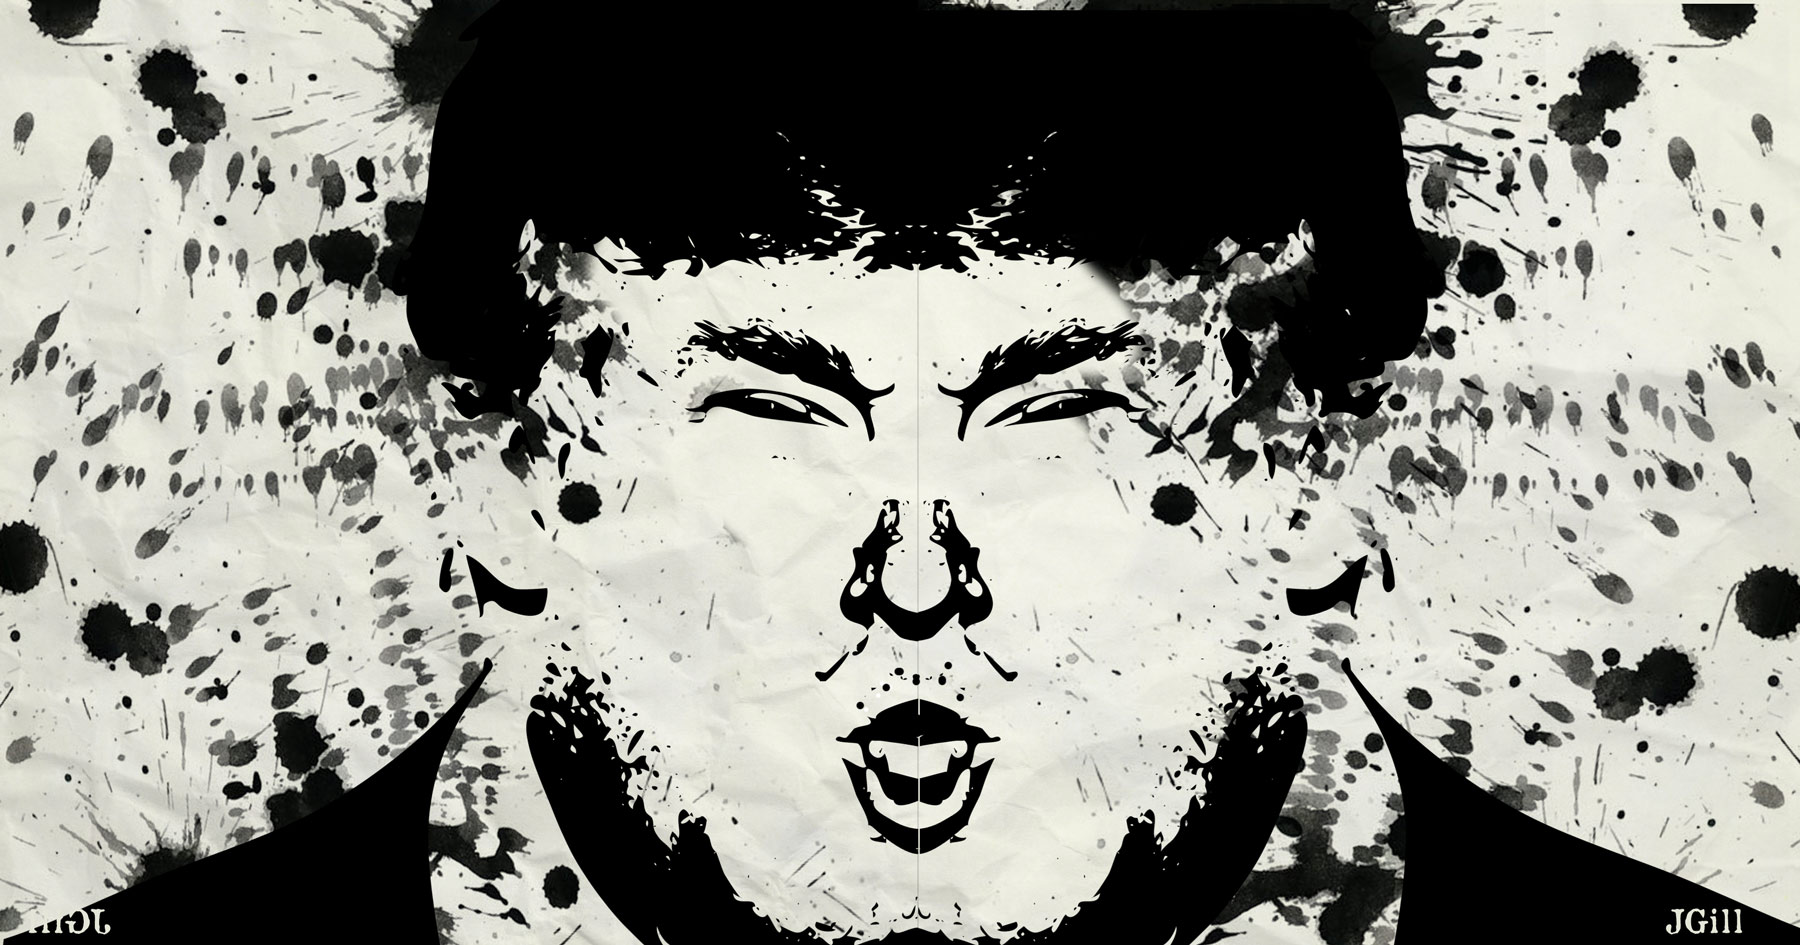 Trump Blot, collage, photomontage, Rorshach, inkblot, editorial, political cartoon, Jim Gill, Paul Jacob, Common Sense, http://cognitivebiasparade.prosite.com/